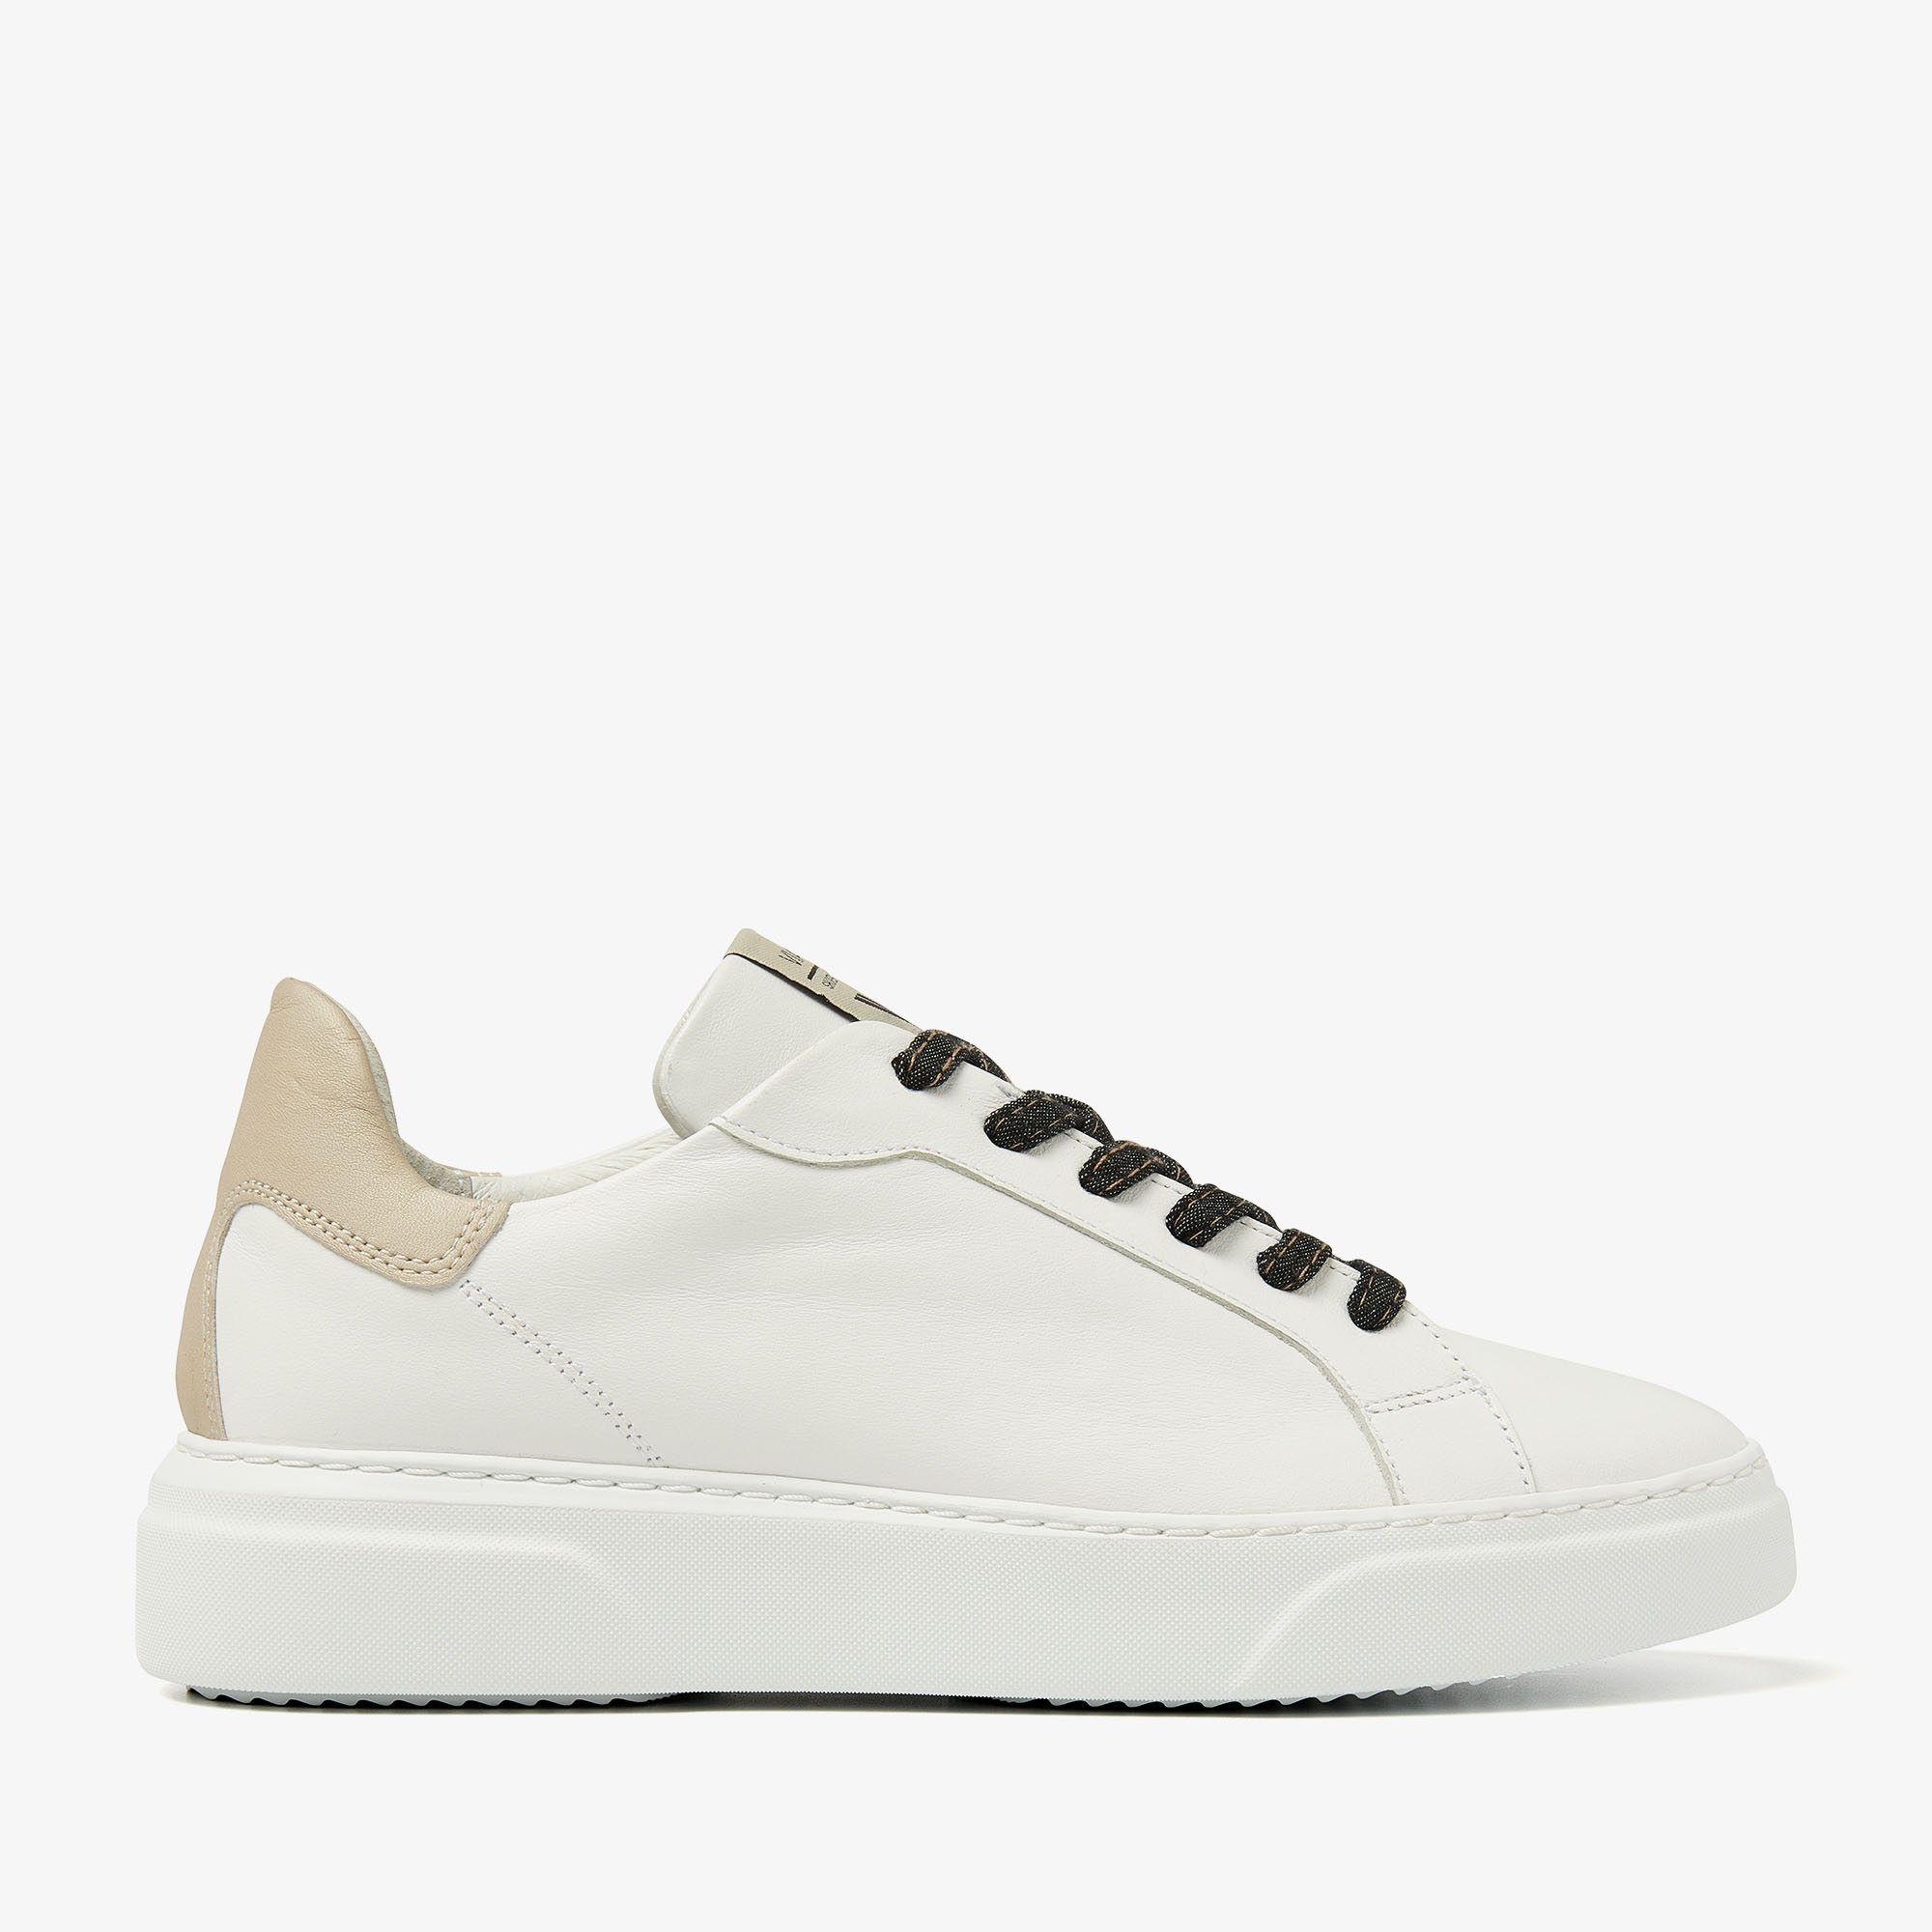 VIA VAI Juno Tate white sneakers dames - Leather